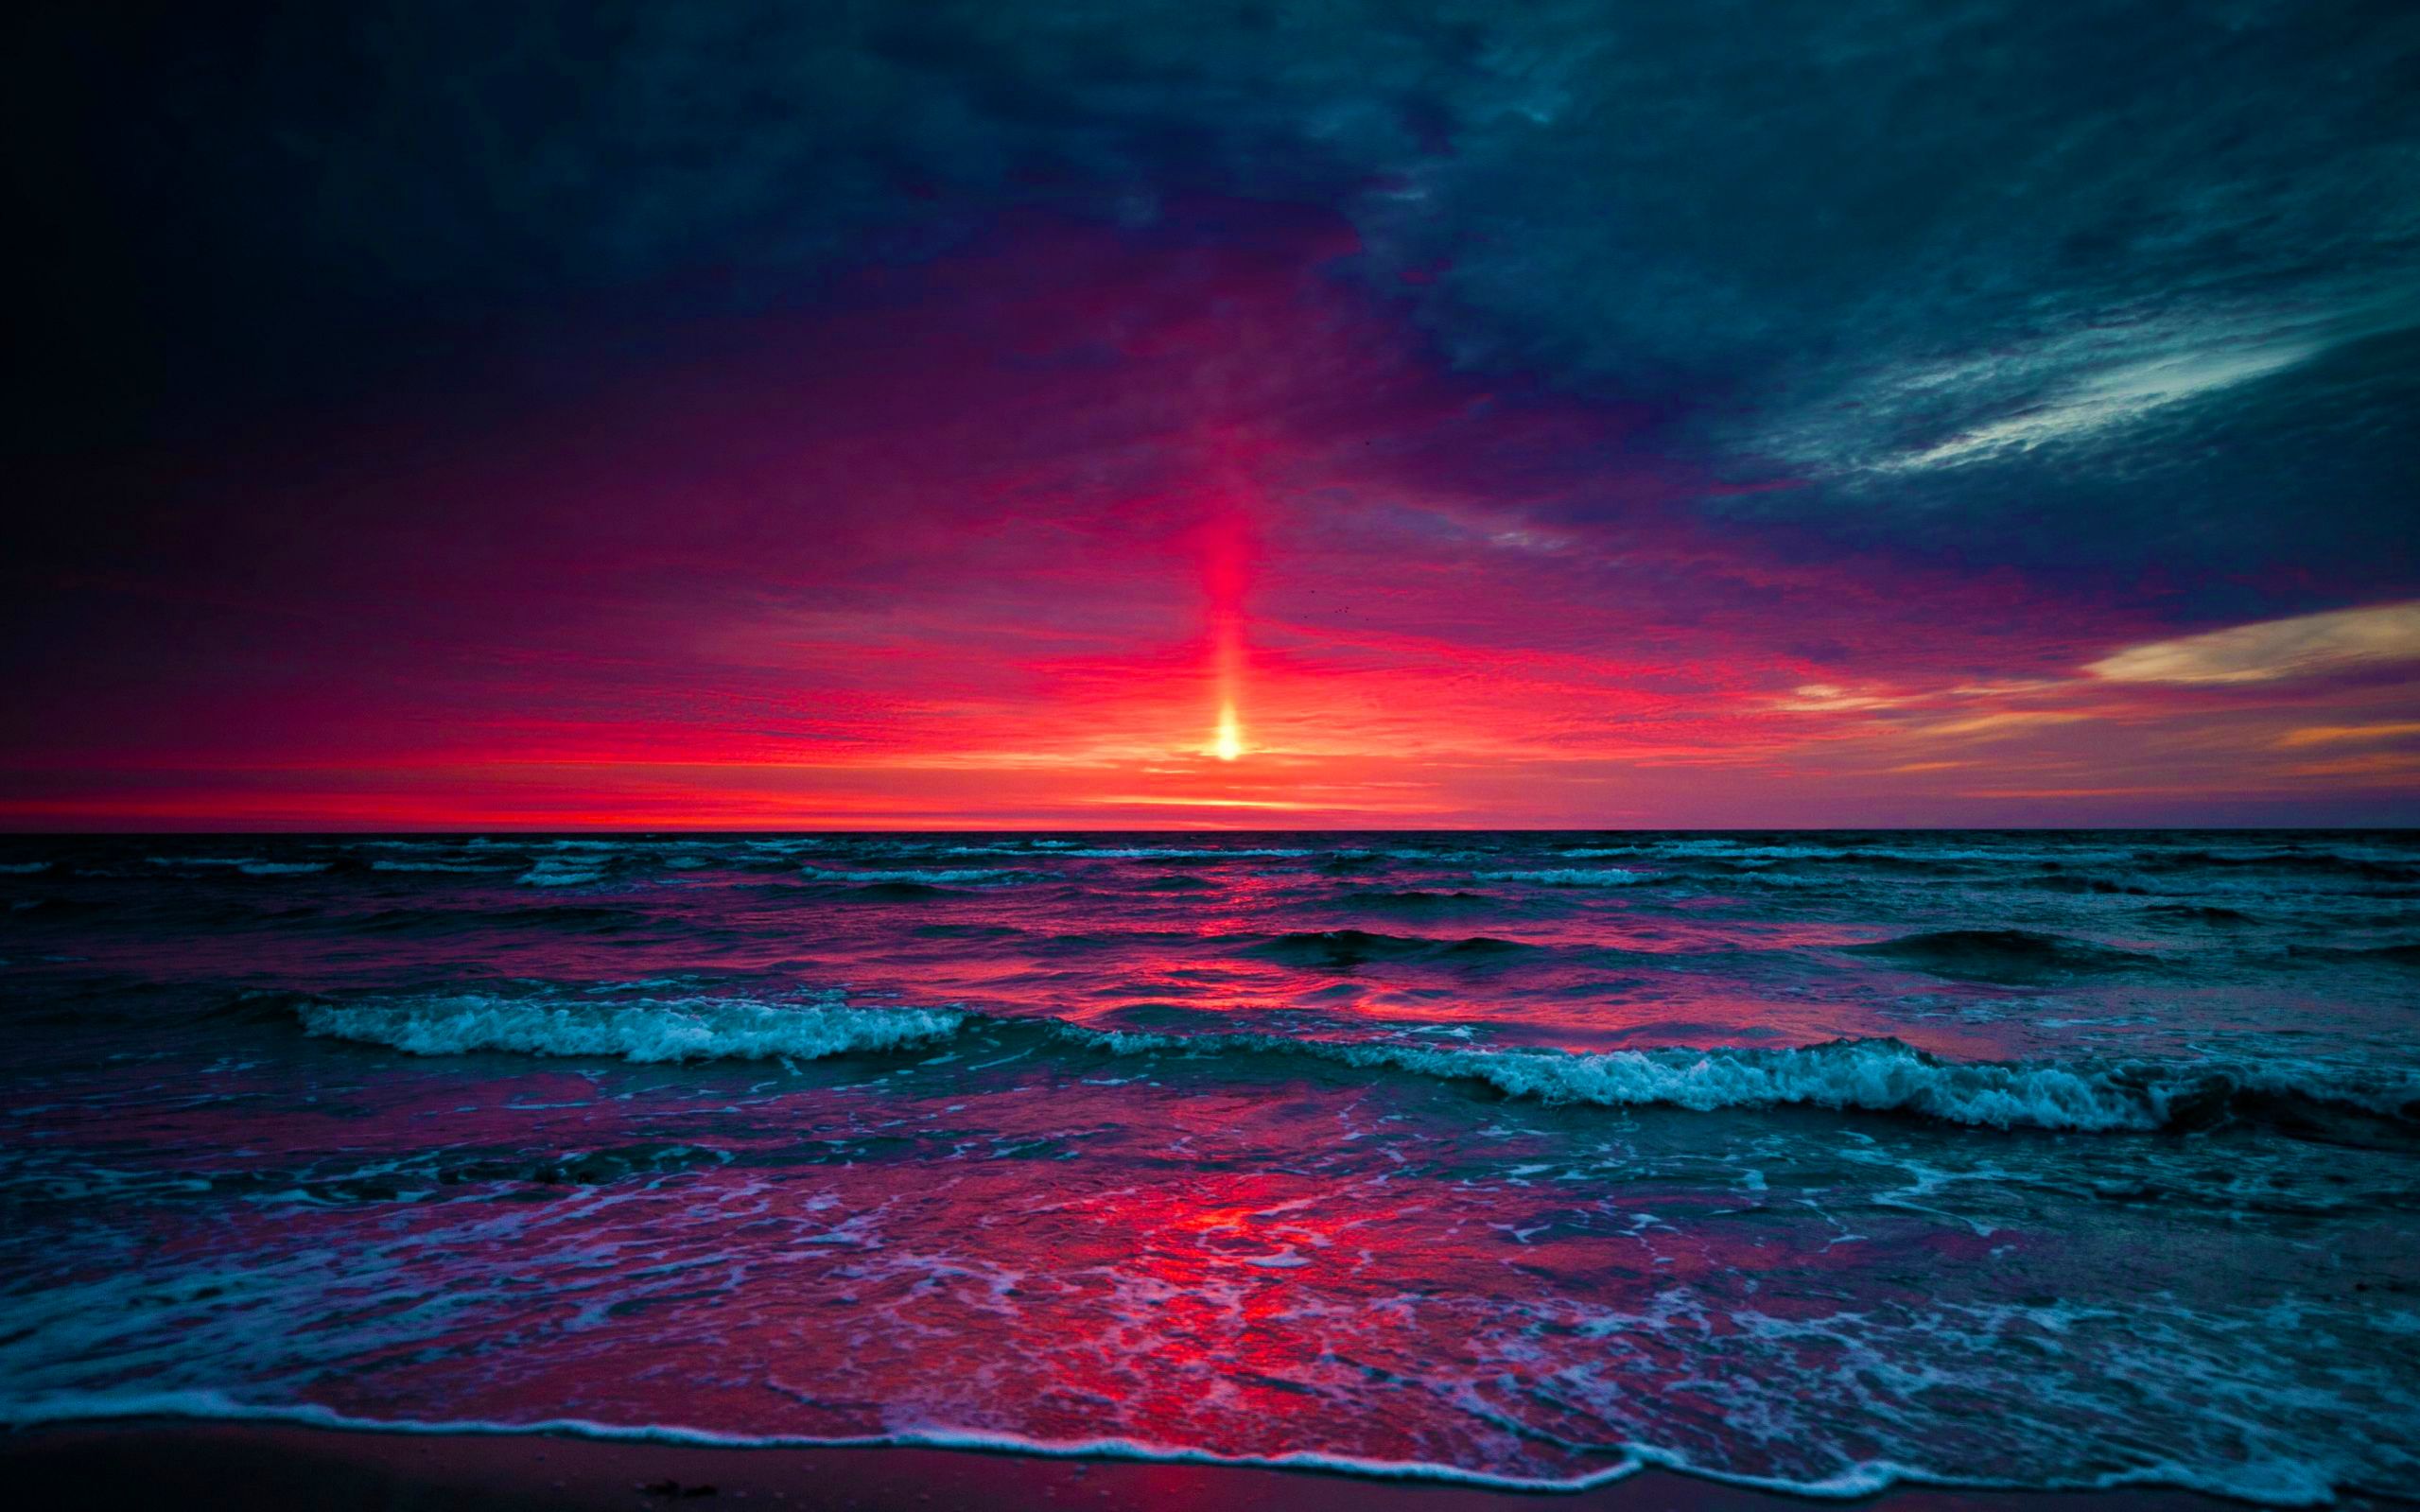 Download Purple Sea Sunset Wallpaper High Resolution Sunset Hd On Itlcat